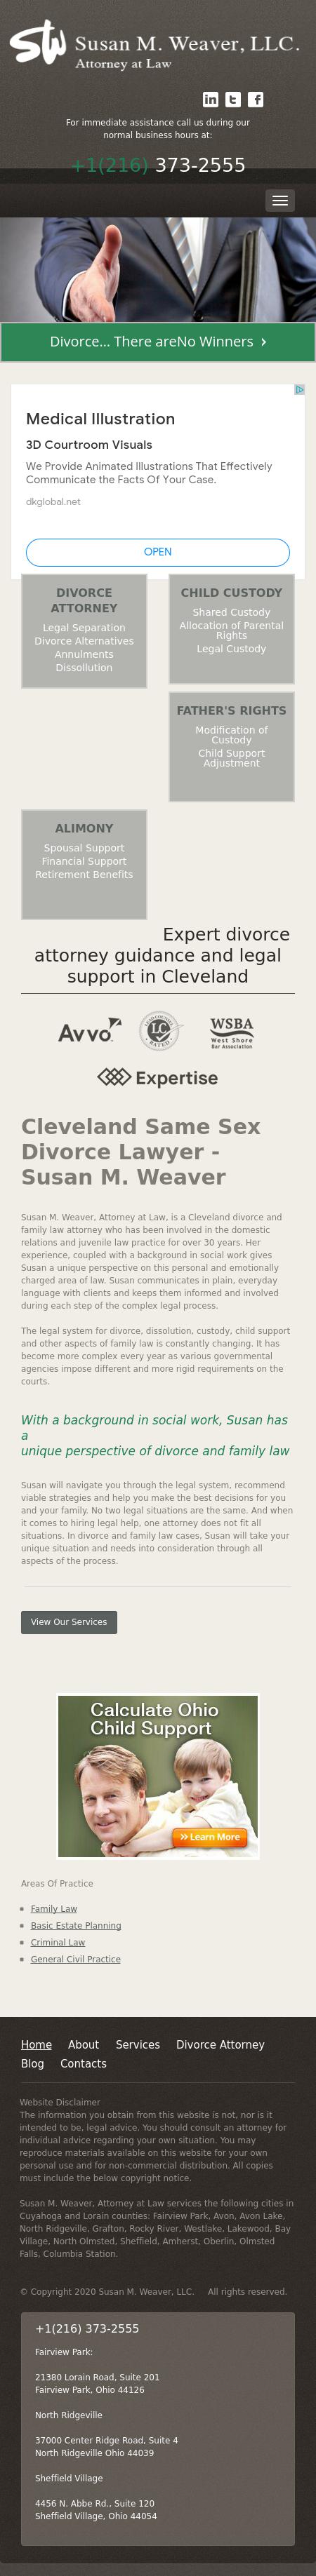 Susan M. Weaver, LLC - Sheffield Village OH Lawyers